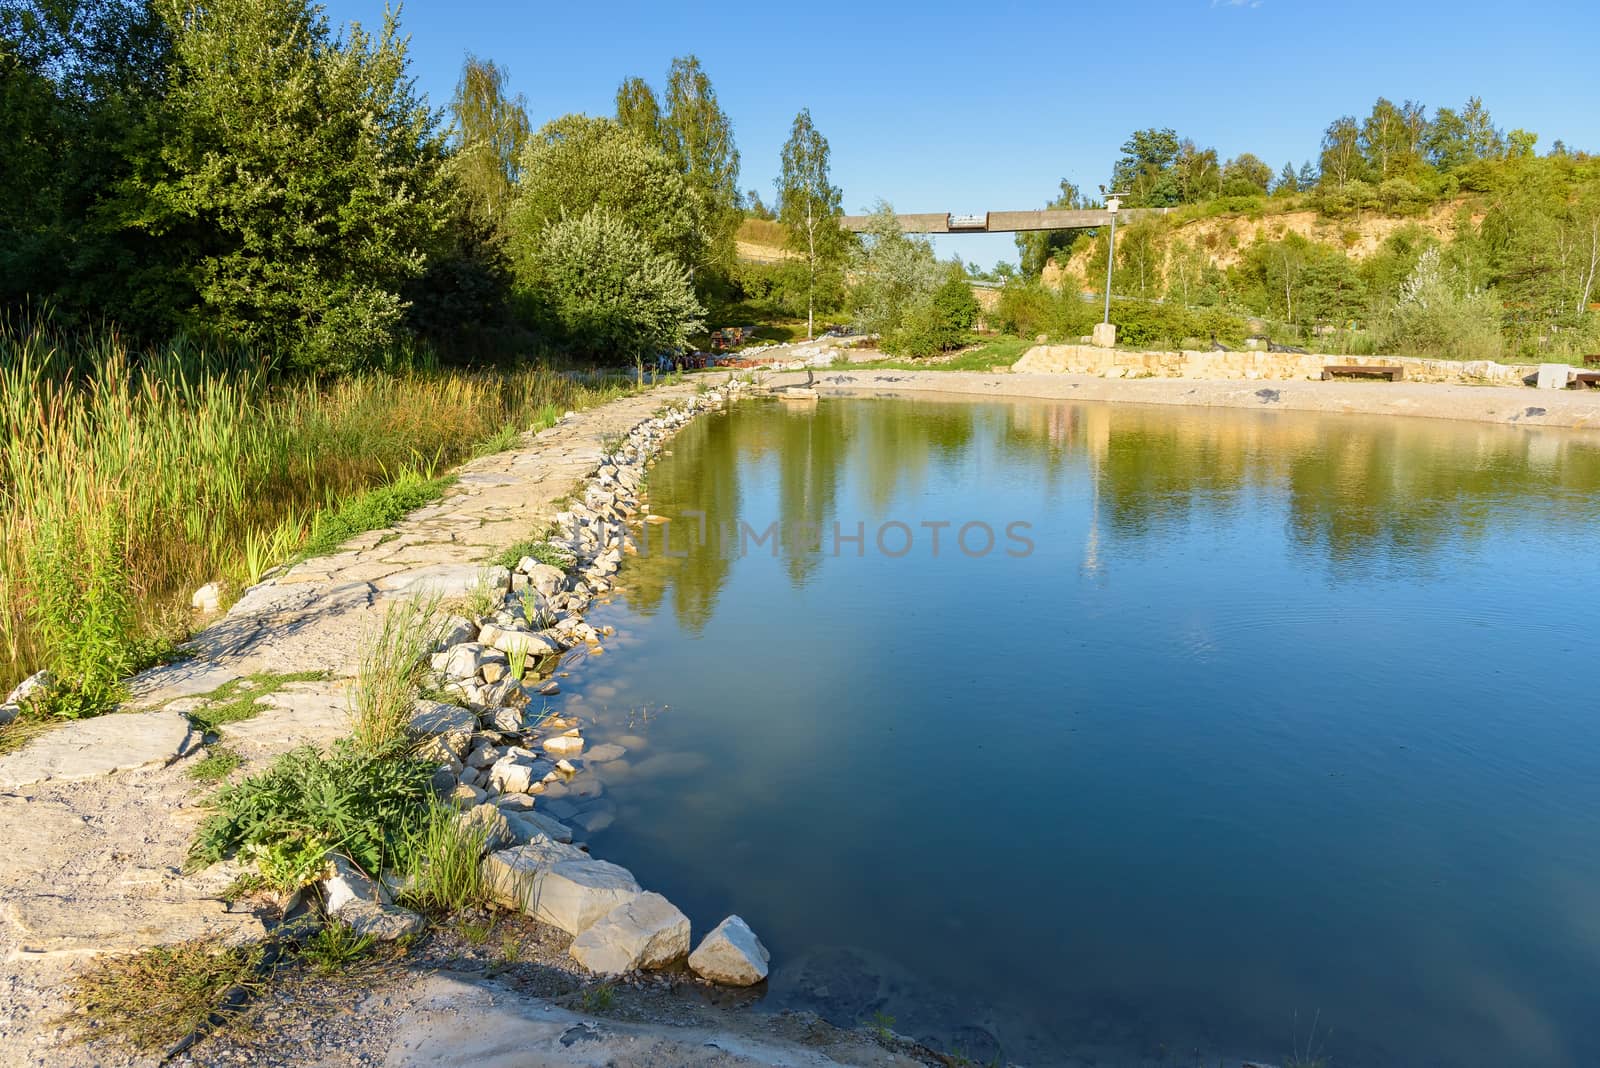 Pond in Geosfera park in Jaworzno by mkos83